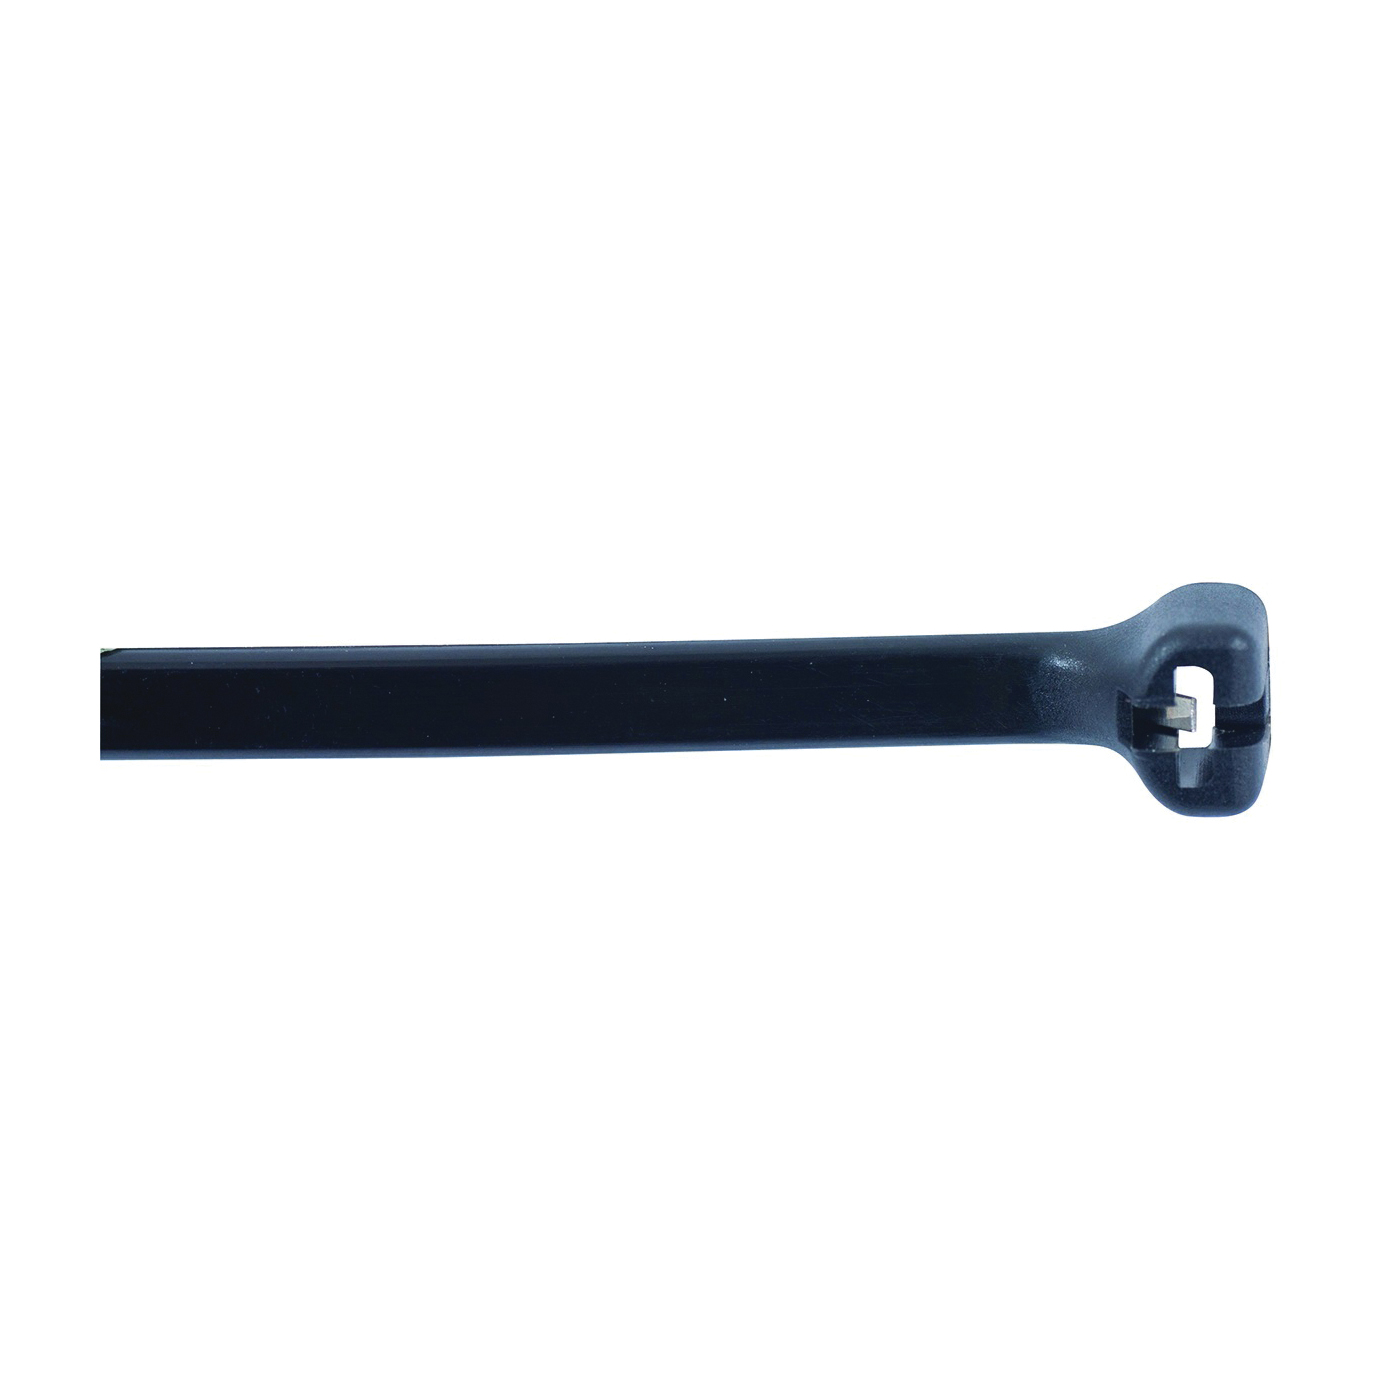 46-308UVBMP Cable Tie, Double-Lock Locking, 6/6 Nylon, Black